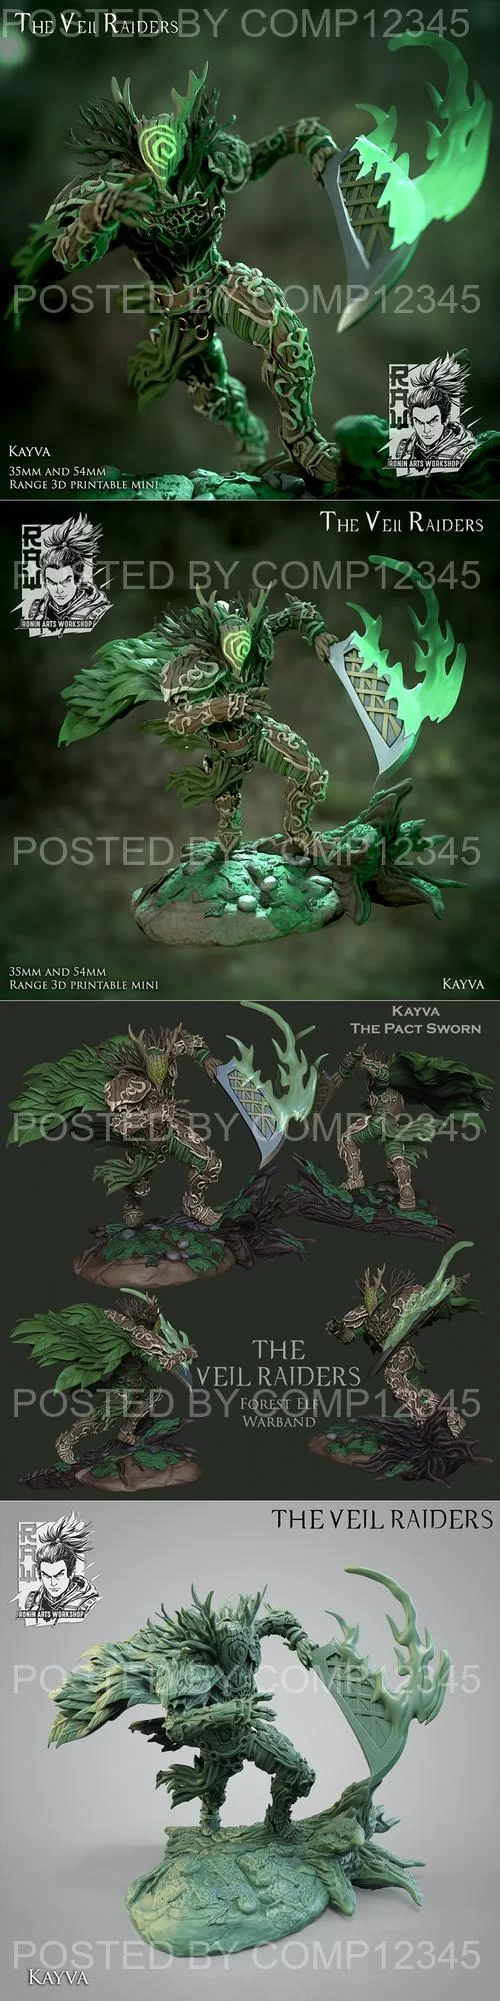 Ronin Arts Workshop - Kayva The Pact Sworn - Forest Elf Living Armor 3D Print